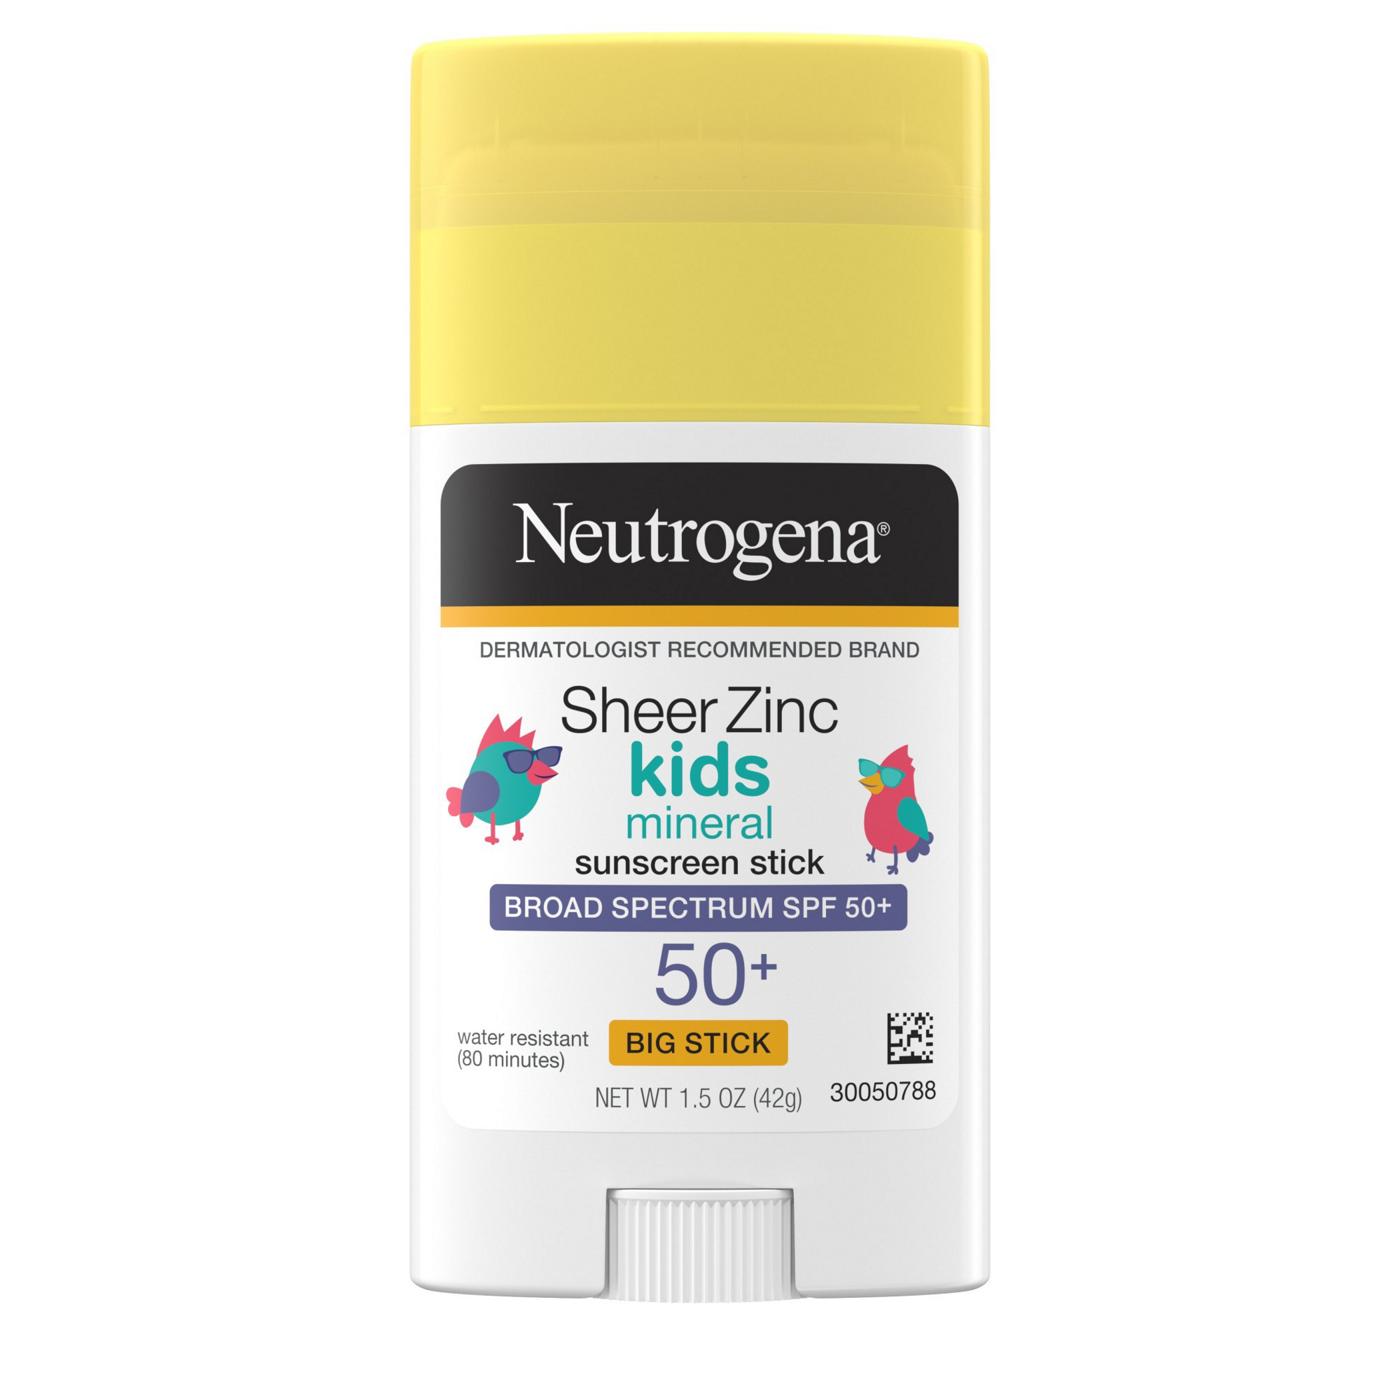 Neutrogena Sheer Zinc Kids Mineral Sunscreen Stick - SPF 50+; image 1 of 8